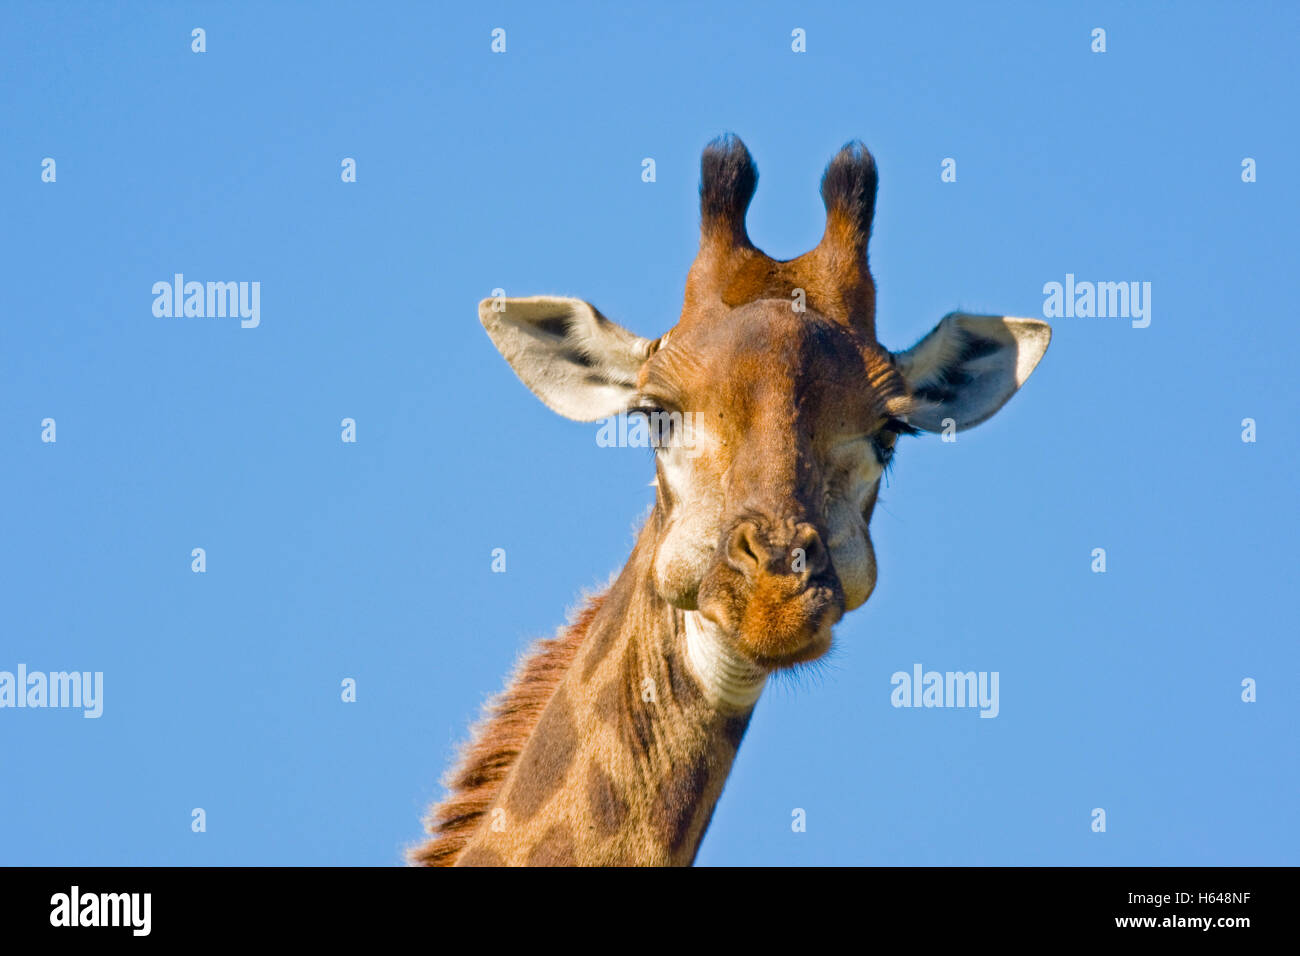 Jirafa (Giraffa camelopardalis), el Parque Nacional de Hluhluwe-Imfolozi, Sudáfrica, África Foto de stock